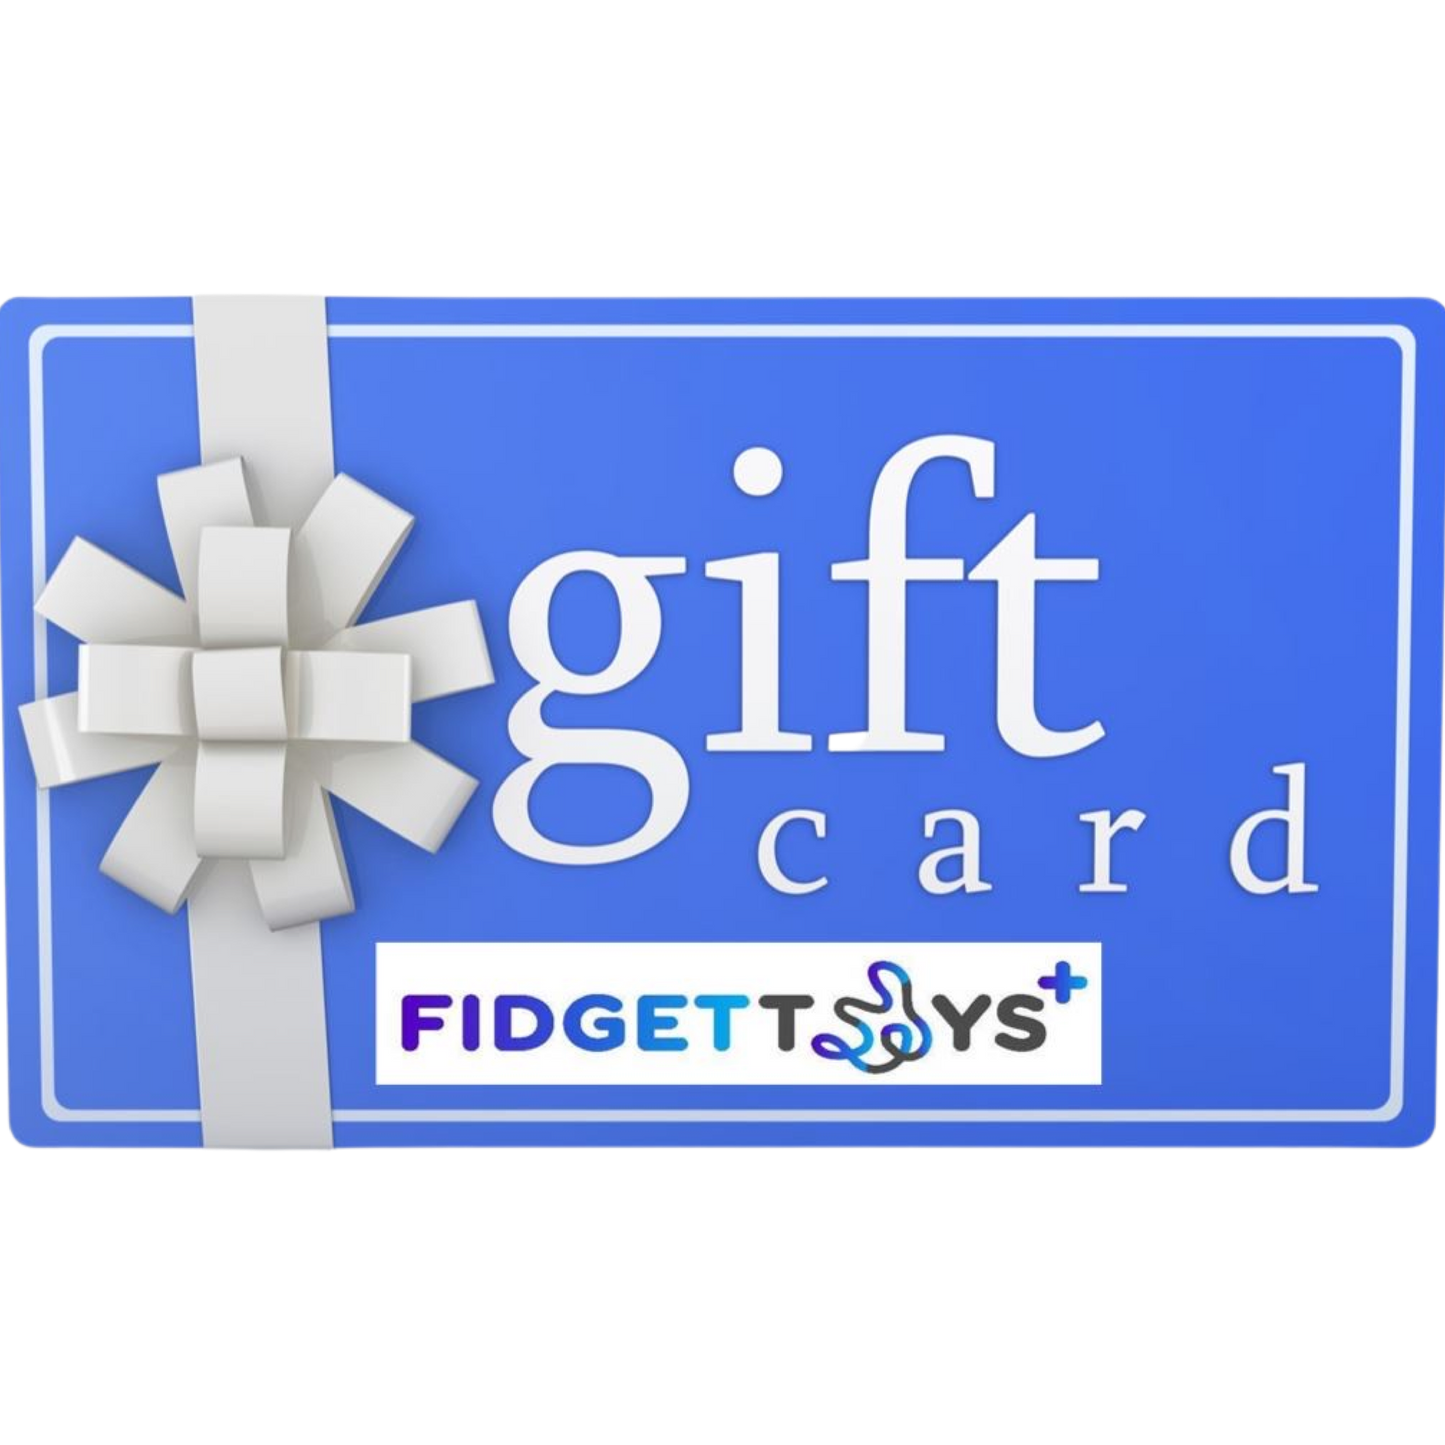 Fidget Toys Plus GIFT CARD